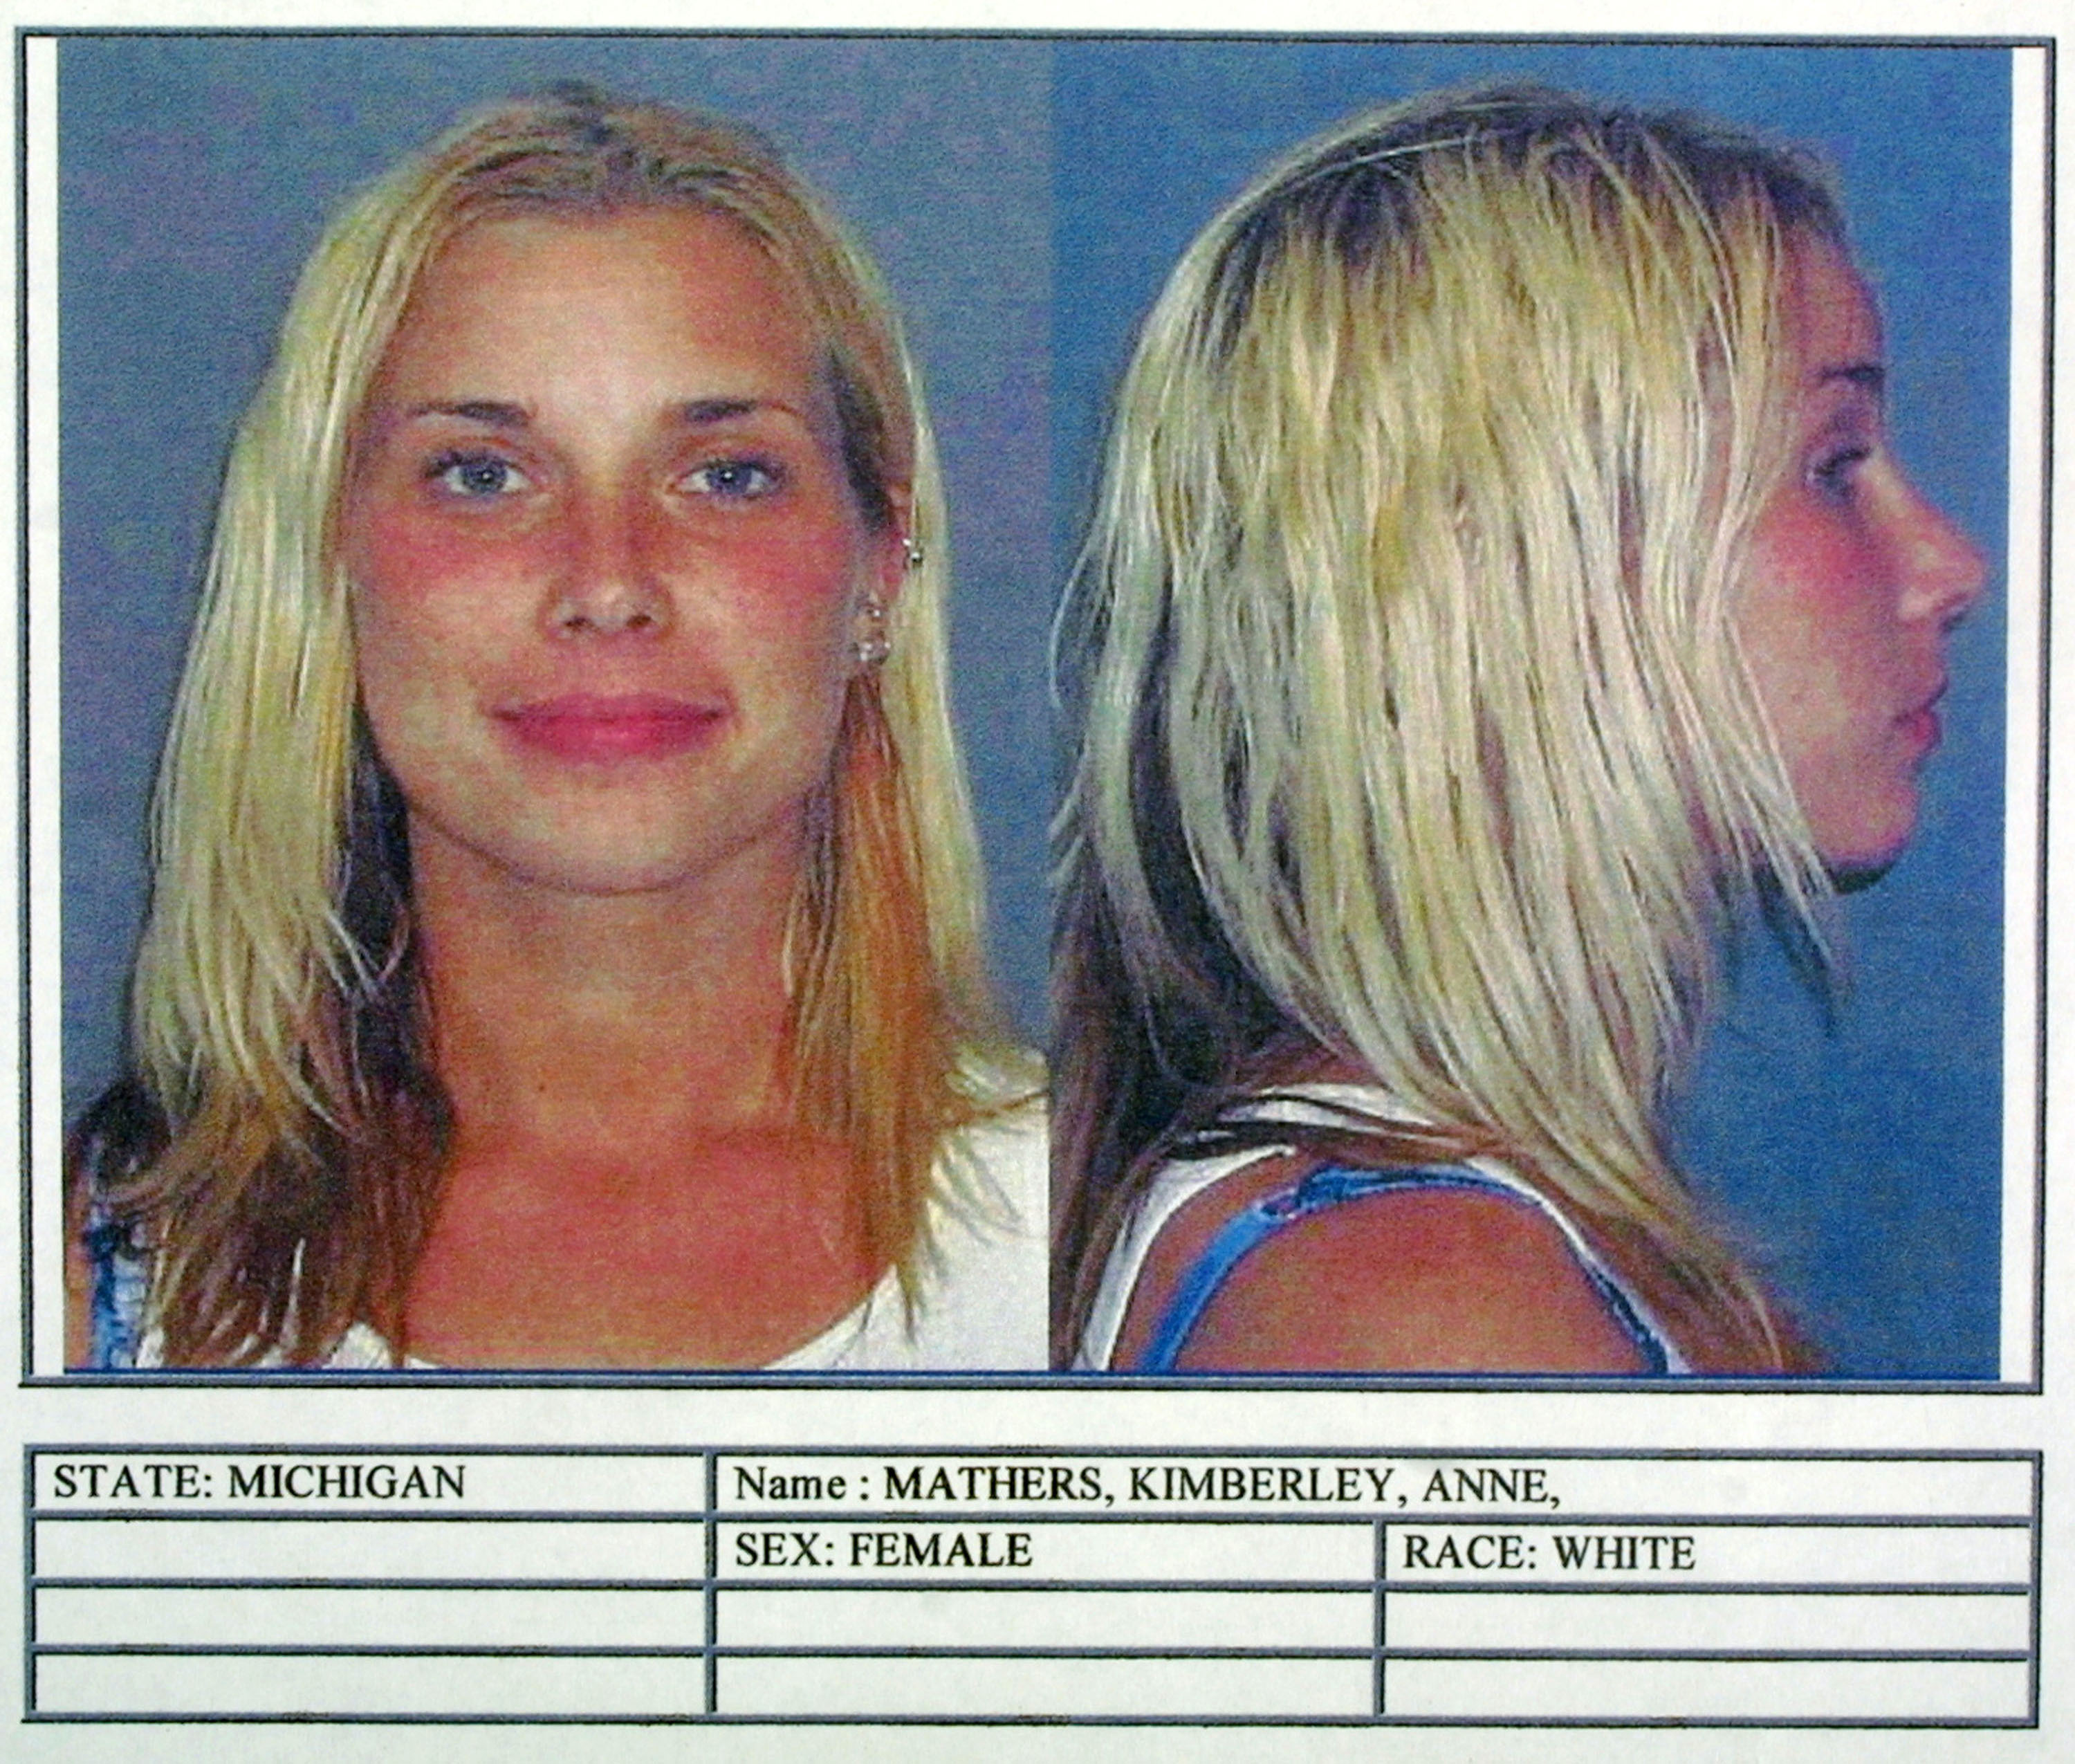 Kim Mathers' Fahndungsfoto wegen Drogenbesitzes in St. Clair Shores, Michigan am 2. Juli 2003 | Quelle: Getty Images